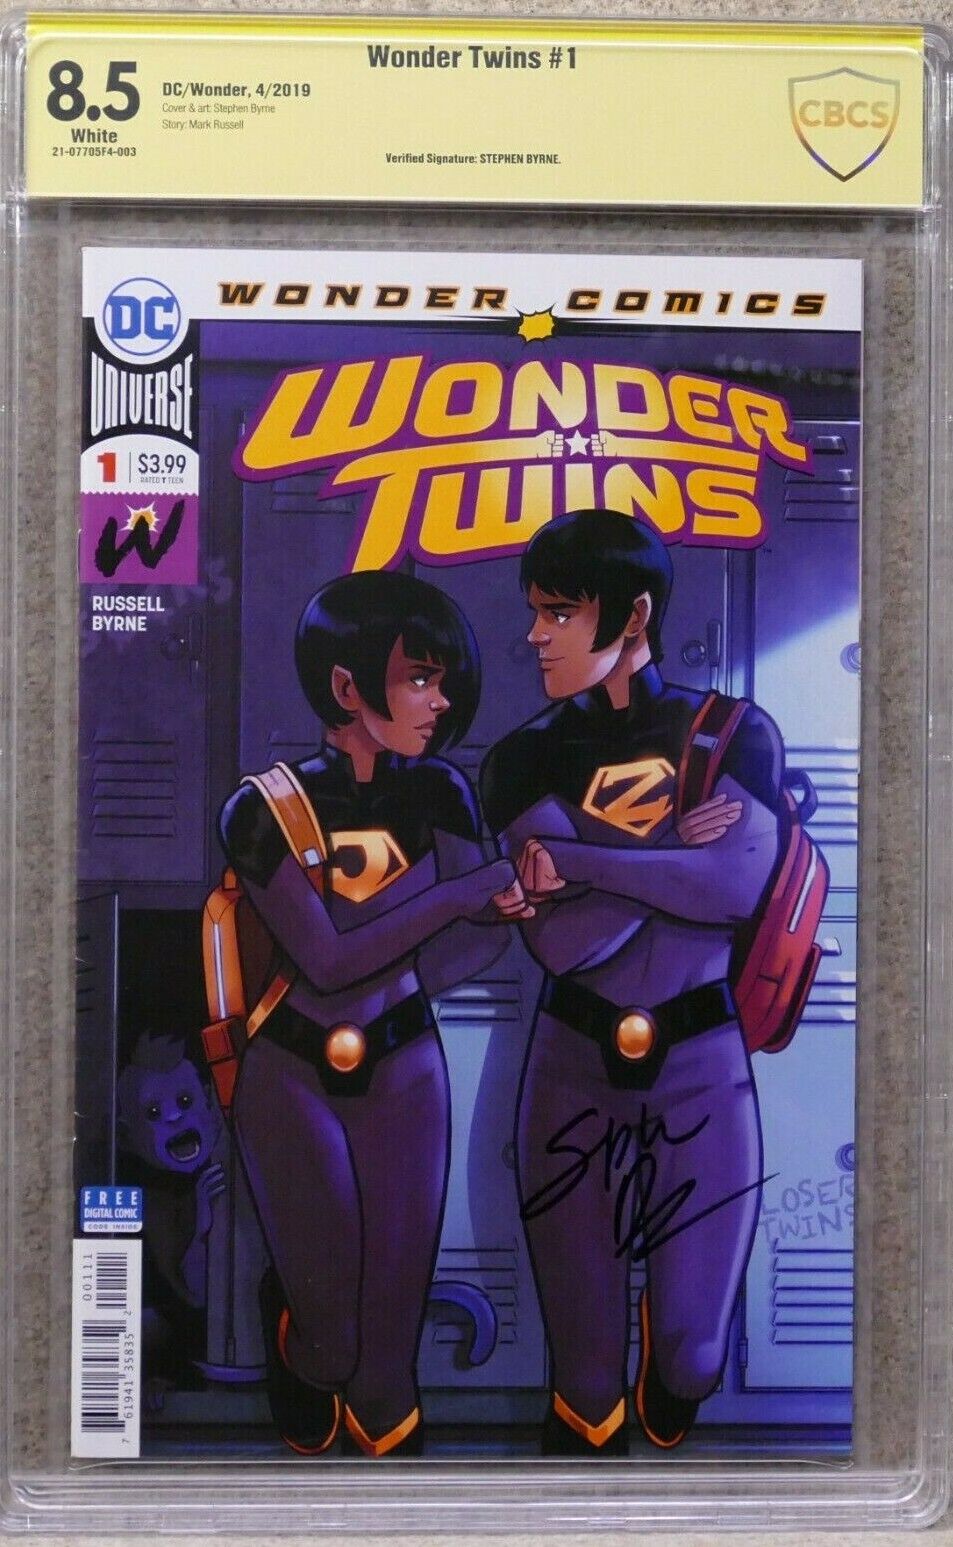 WONDER TWINS #1 - DC/Wonder 2019 - Stephen Byrne verified signature CBCS 8.5